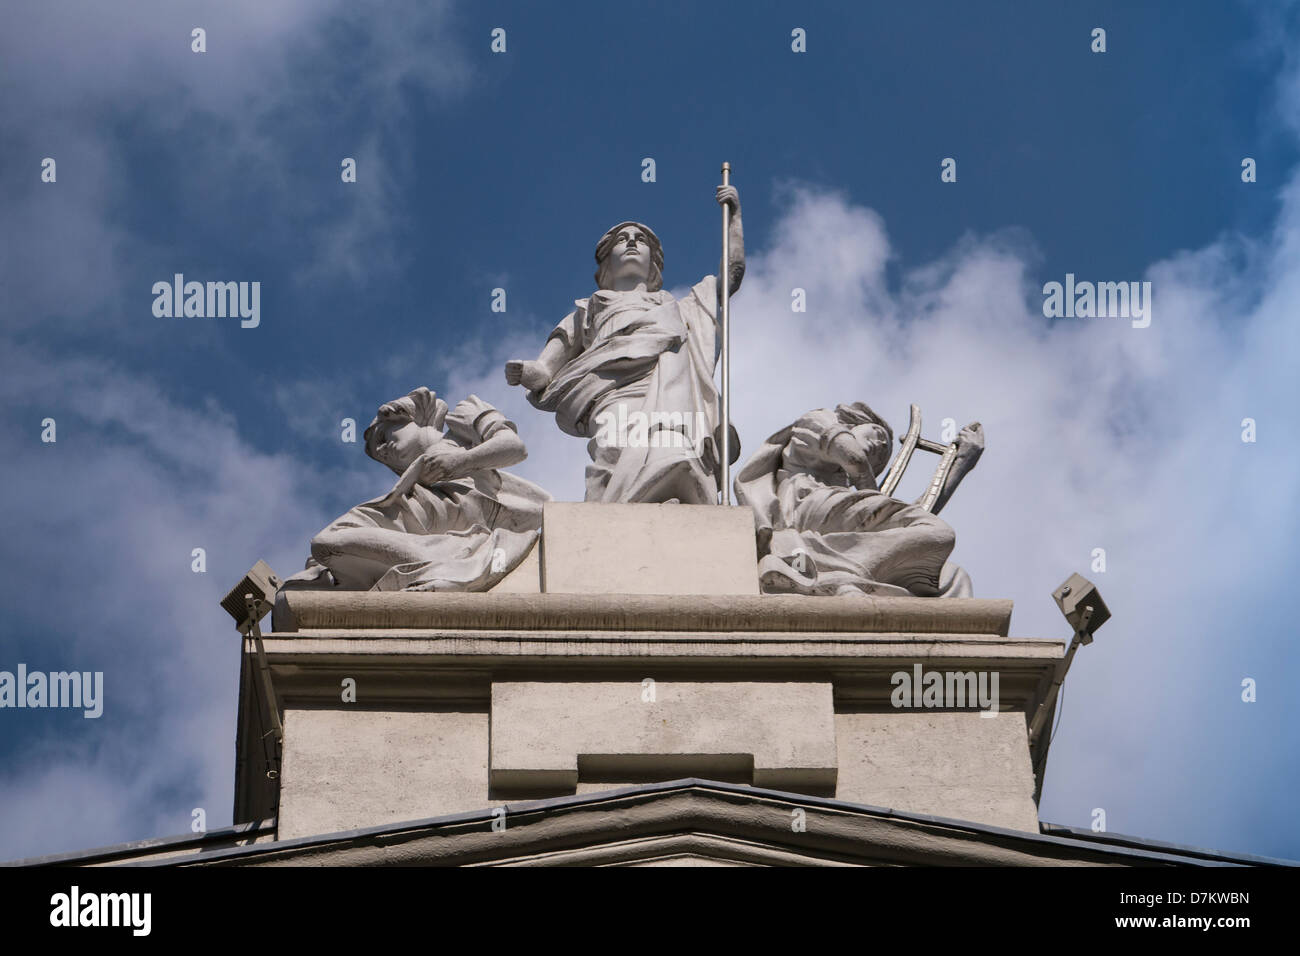 LONDON, Großbritannien - 06. MAI 2013: Statue auf dem London Palladium gegen den bewölkten Himmel Stockfoto